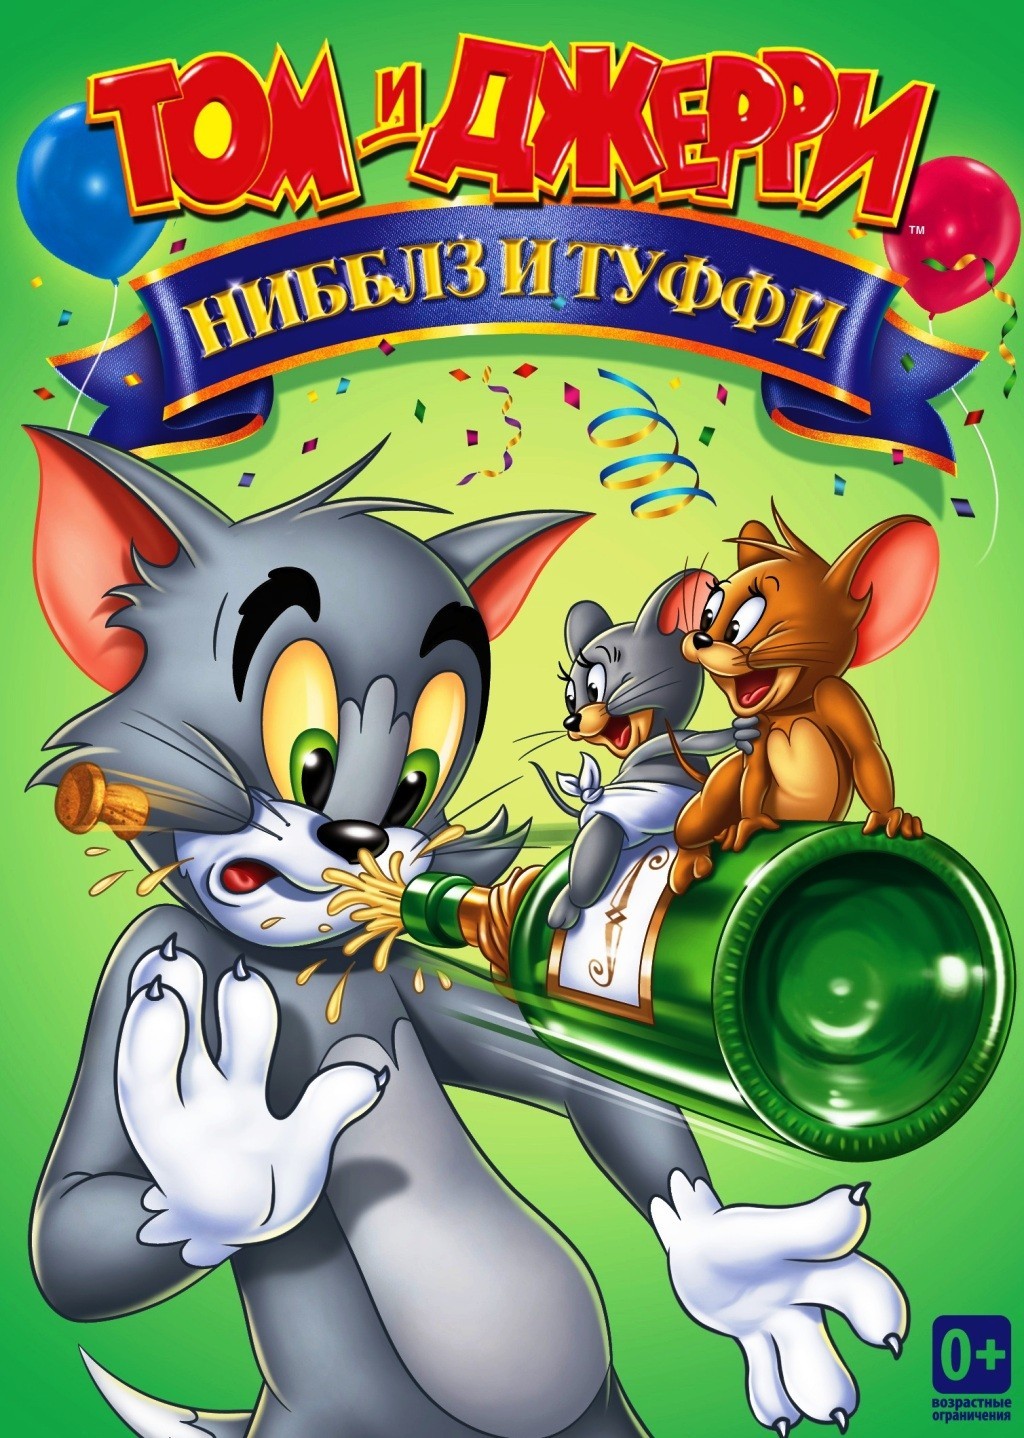 Том и Джерри: Нибблз и Туффи (DVD)